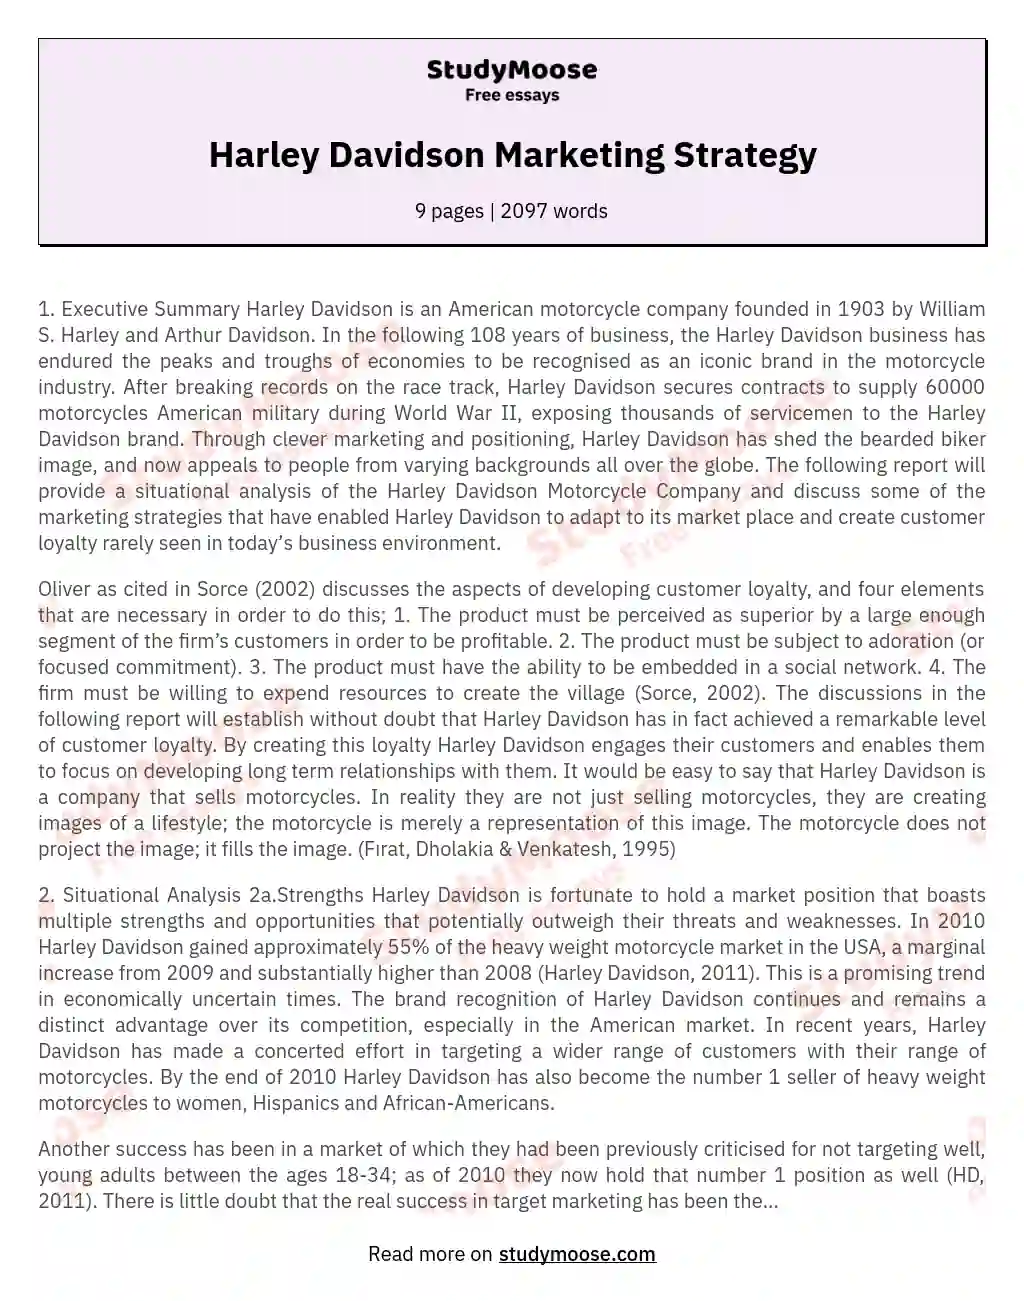 Harley Davidson: Marketing Success and Customer Loyalty essay